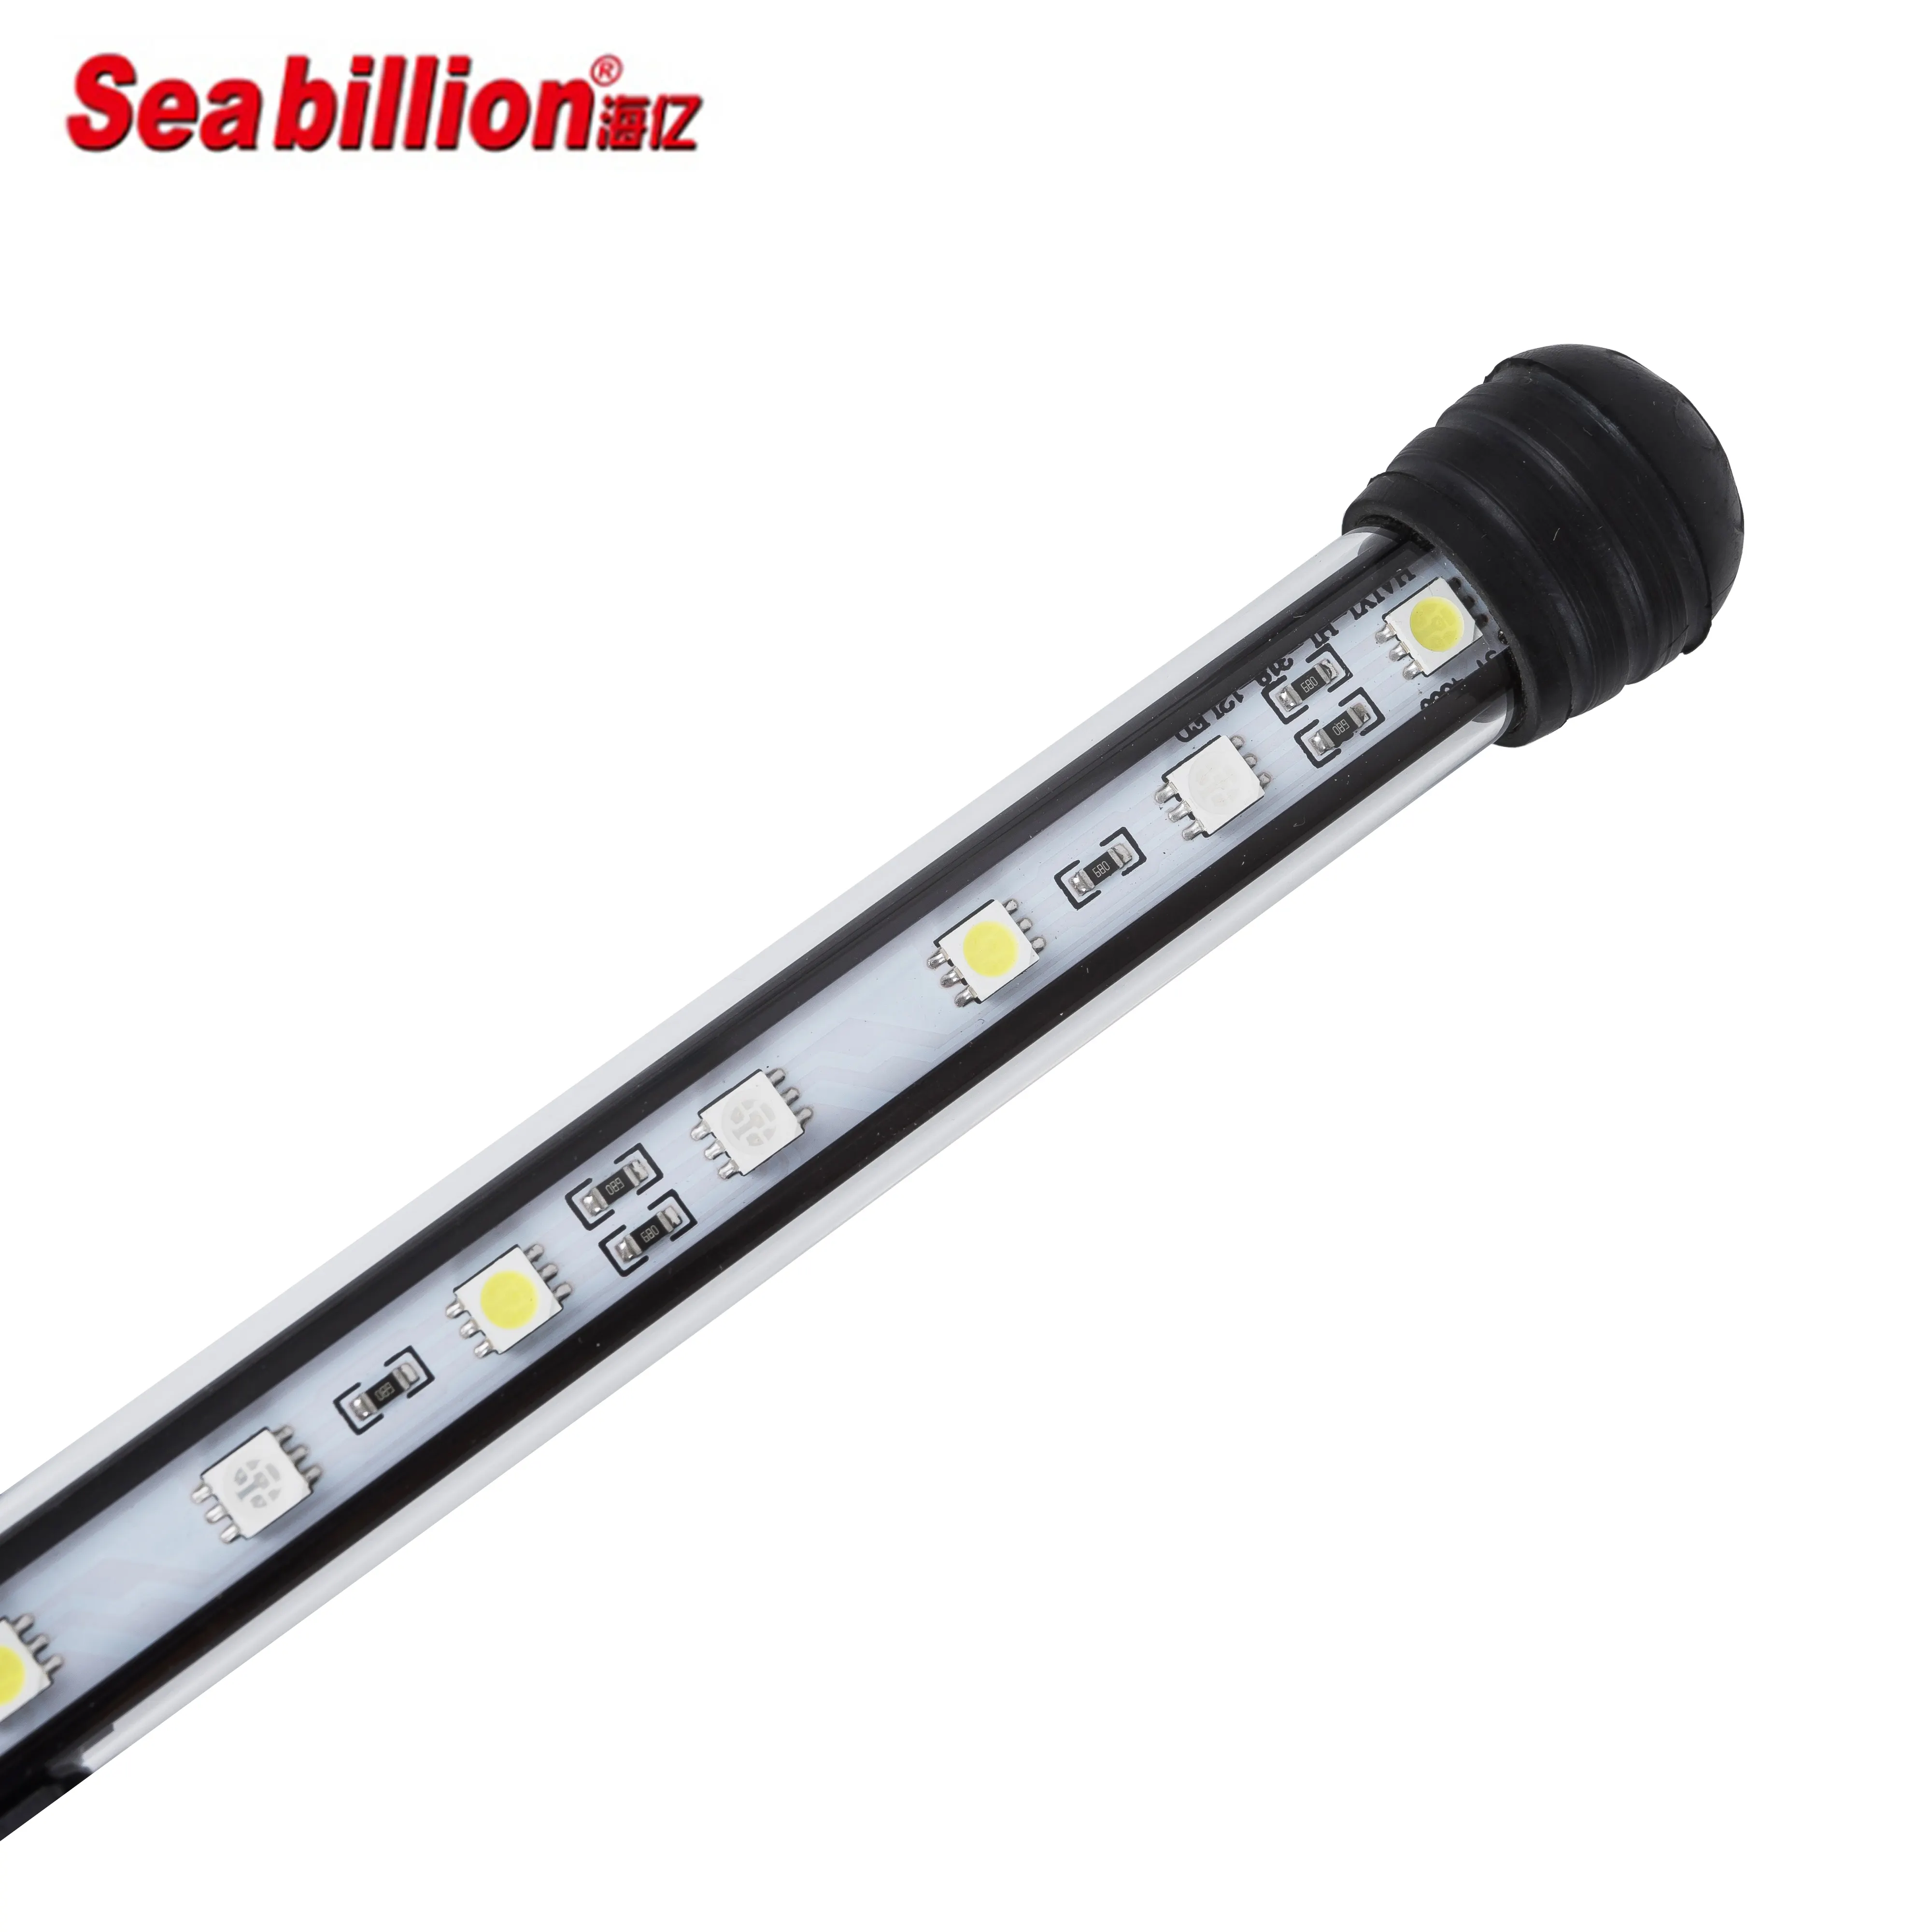 New product Zhongshan Seabillion T4 LED-818 5.5w submersible aquarium led lamp